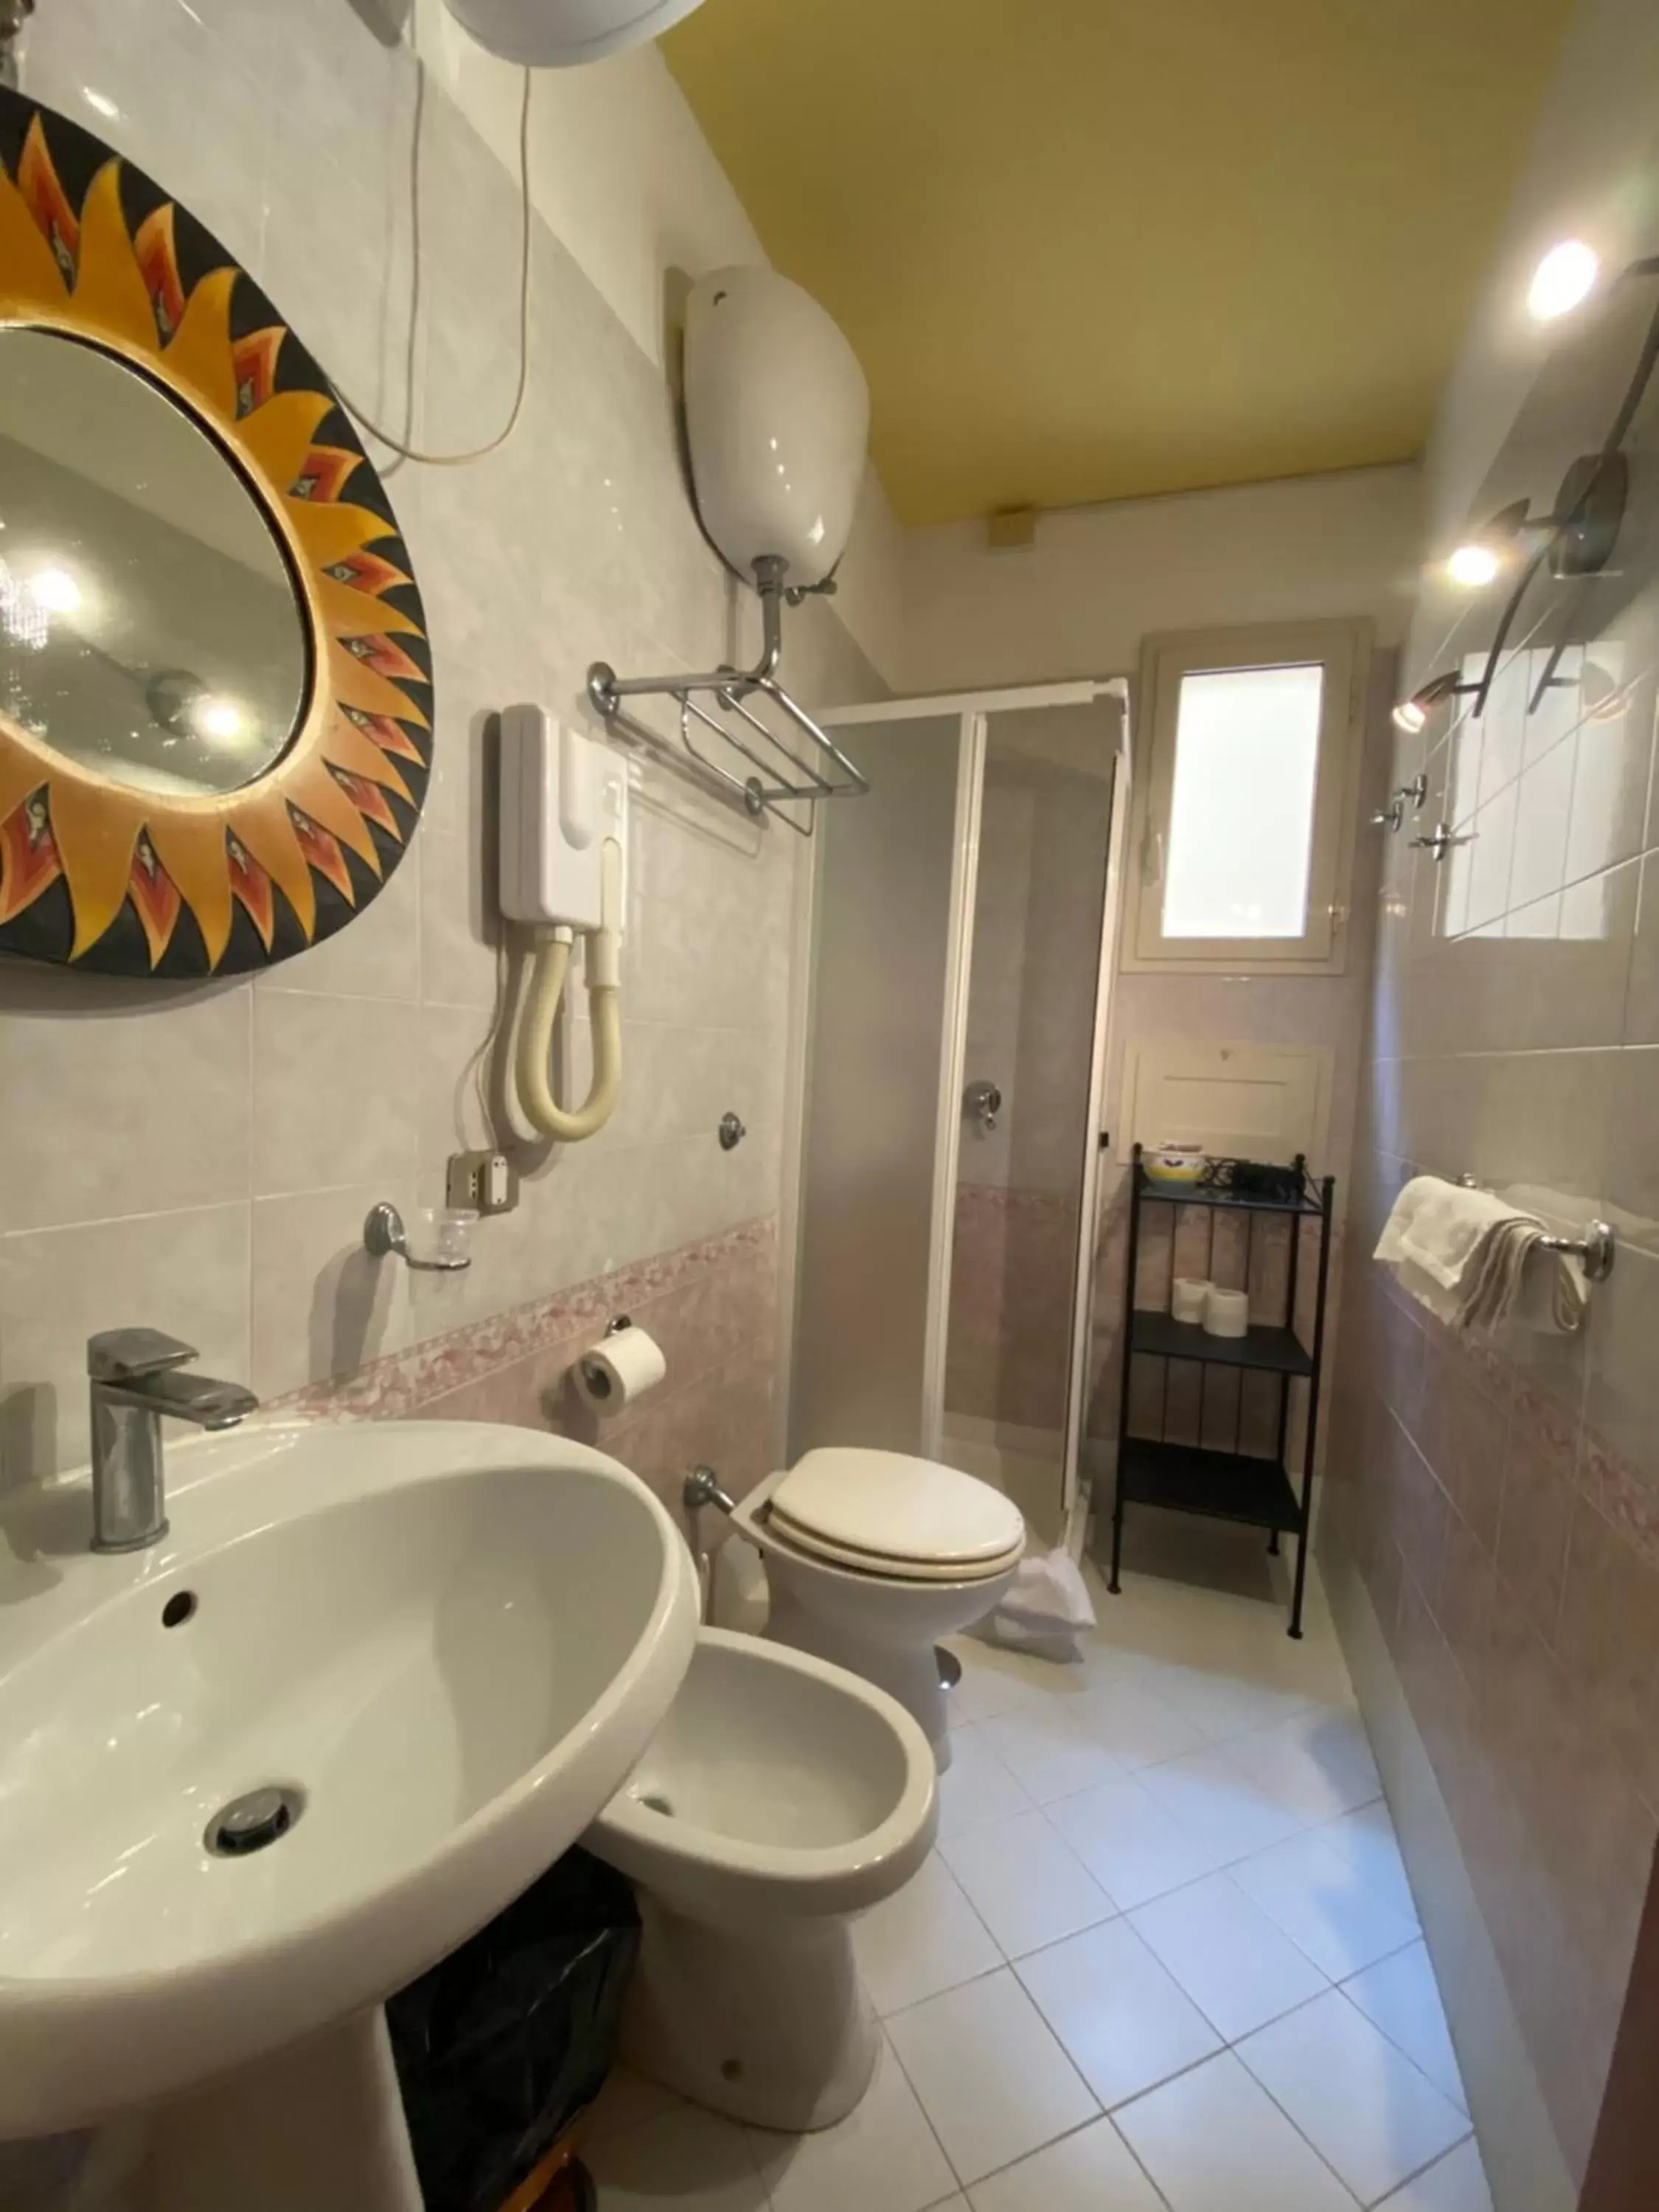 Bathroom in Hotel Europeo Napoli